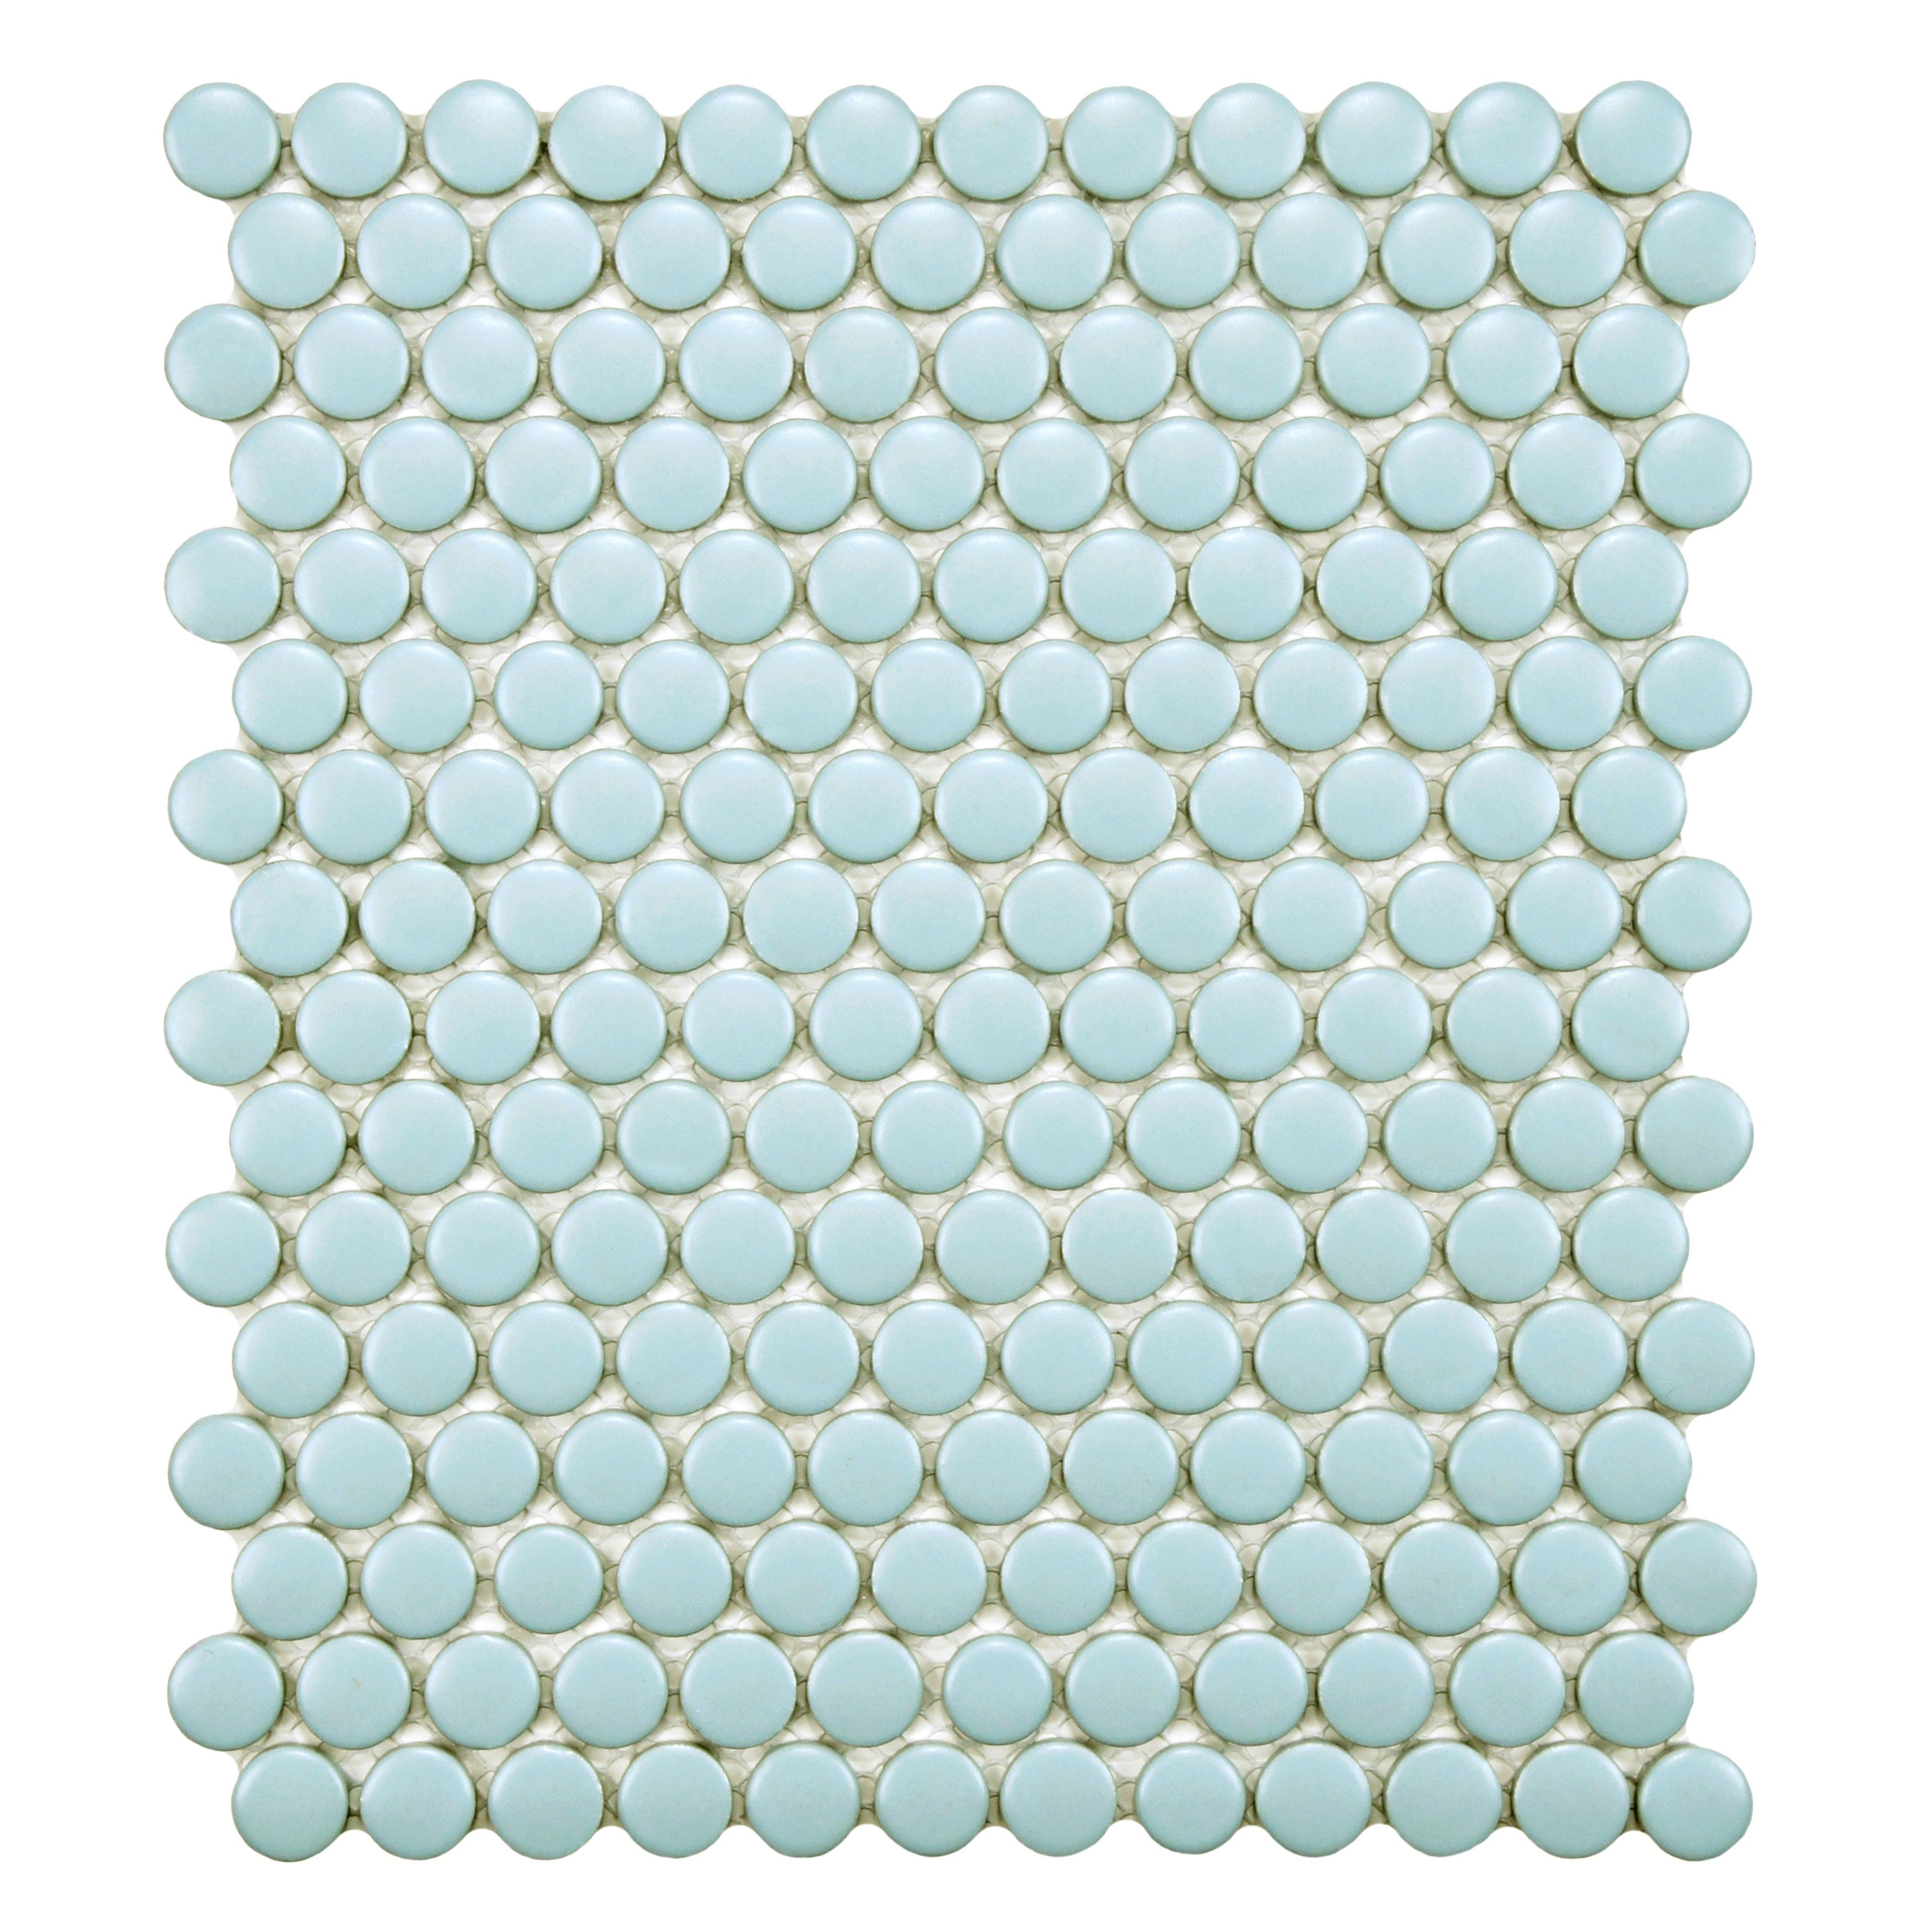 Retro 3/4" x 3/4" Porcelain Glazed Mosaic in Matte Light Blue